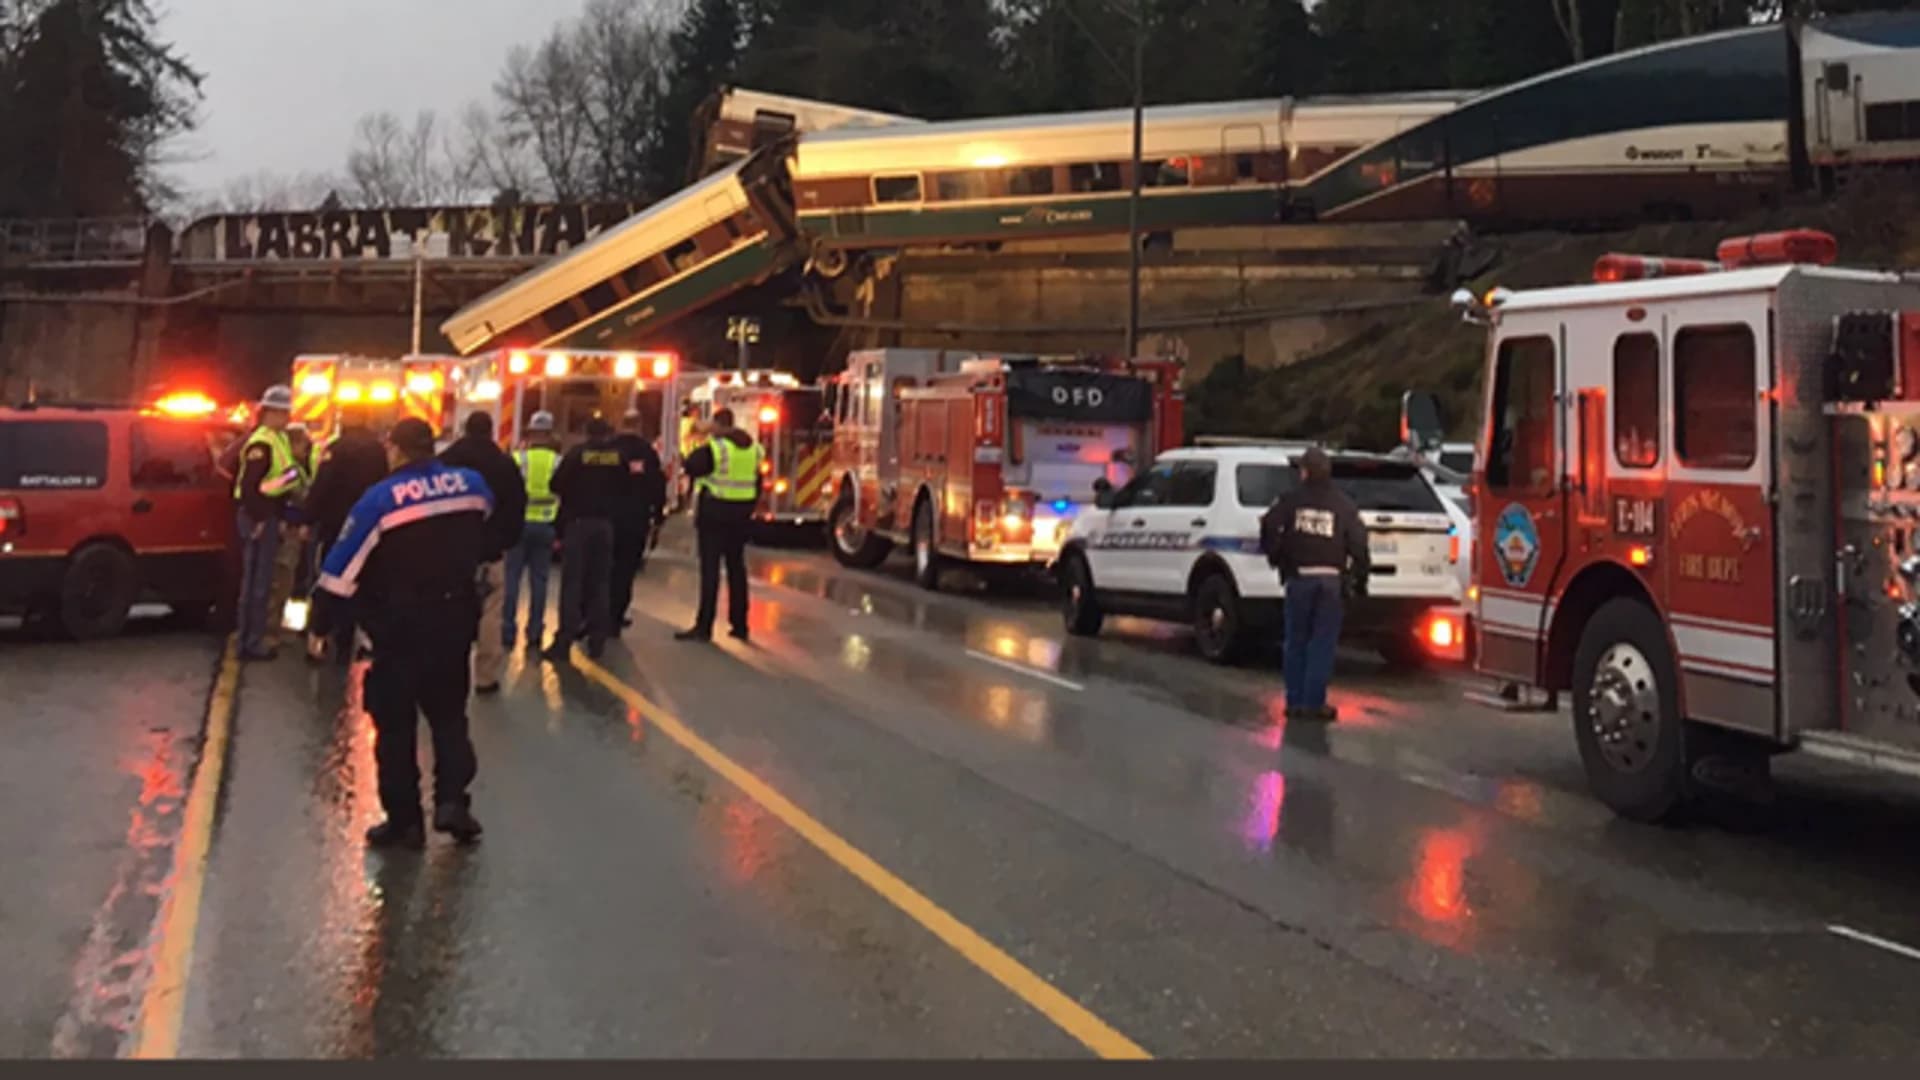 Amtrak train on new route hurtles off bridge in fatal crash